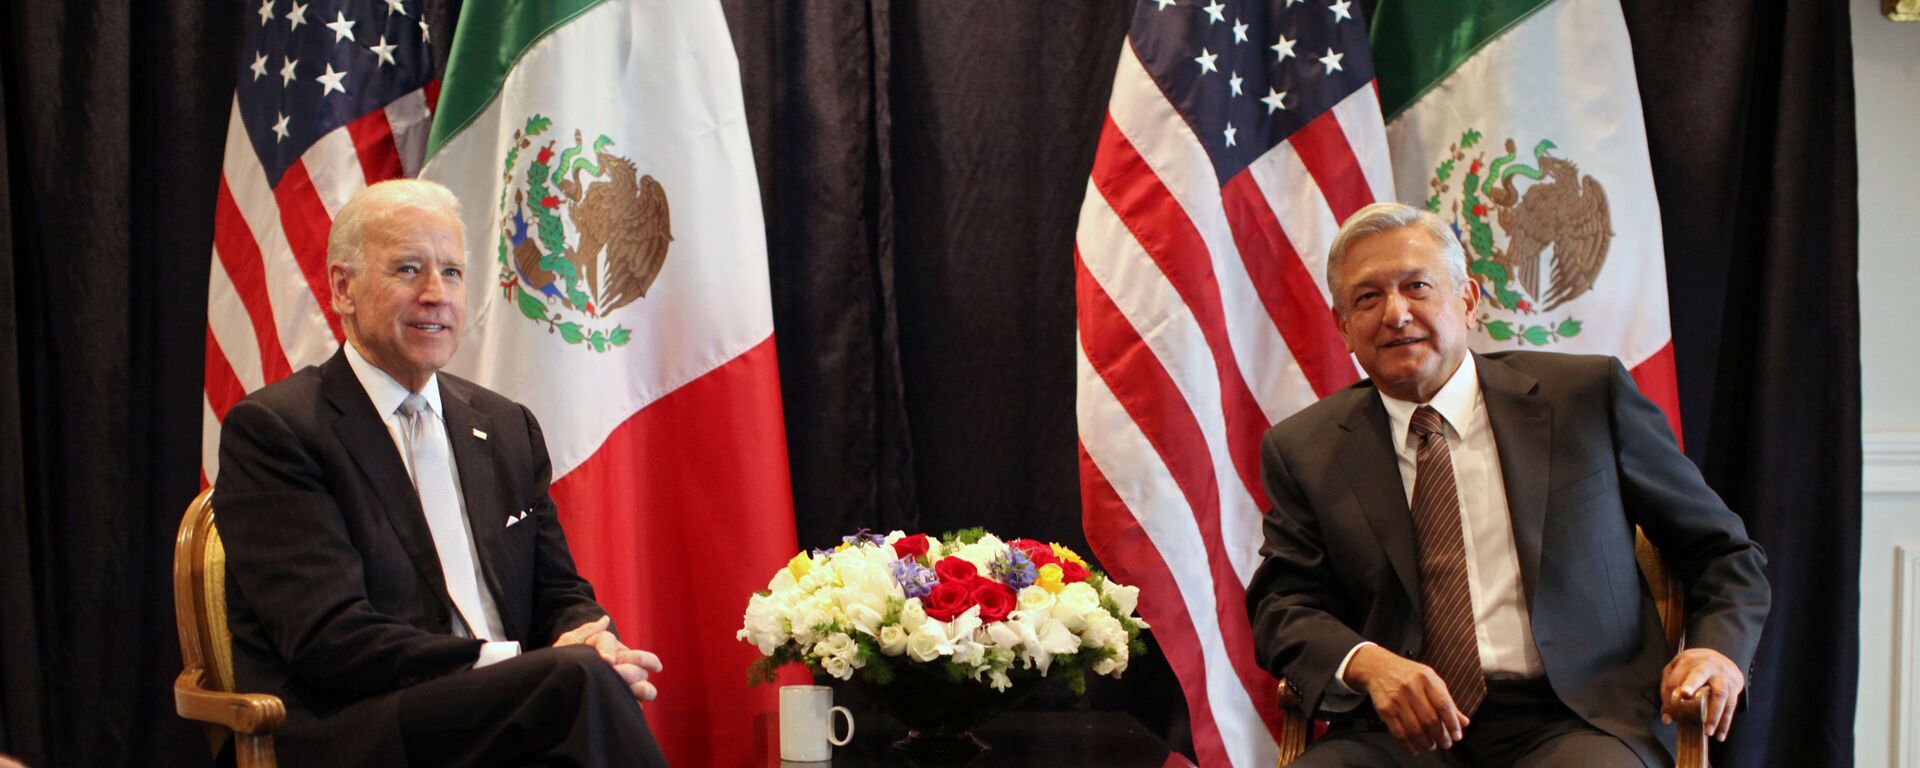 Joe Biden y Andrés Manuel López Obrador, 2012 - Sputnik Mundo, 1920, 25.03.2021